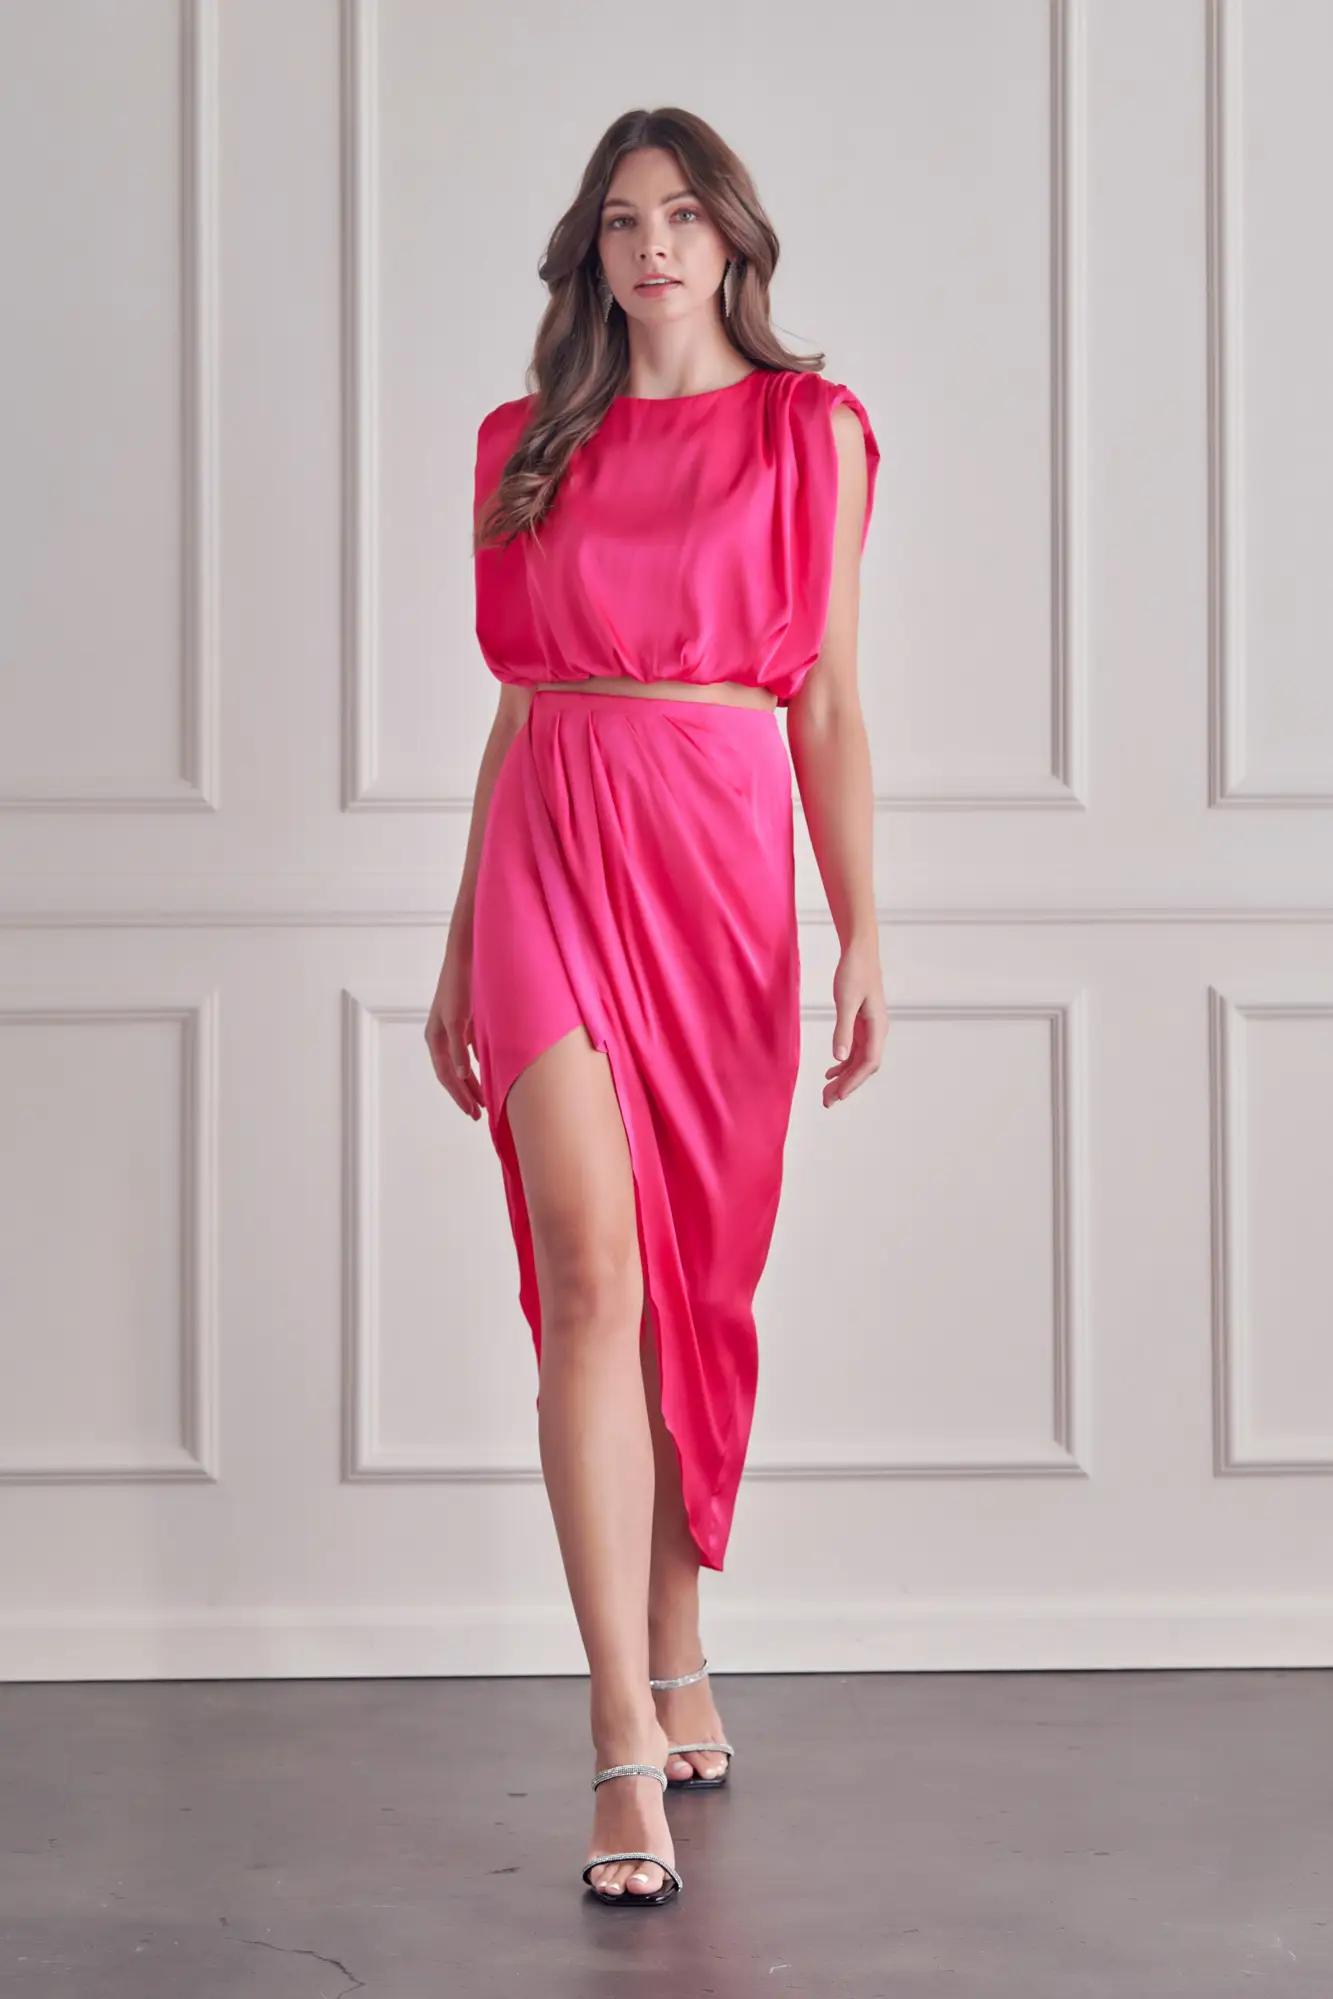 Simply Irresistible Pink Midi Skirt